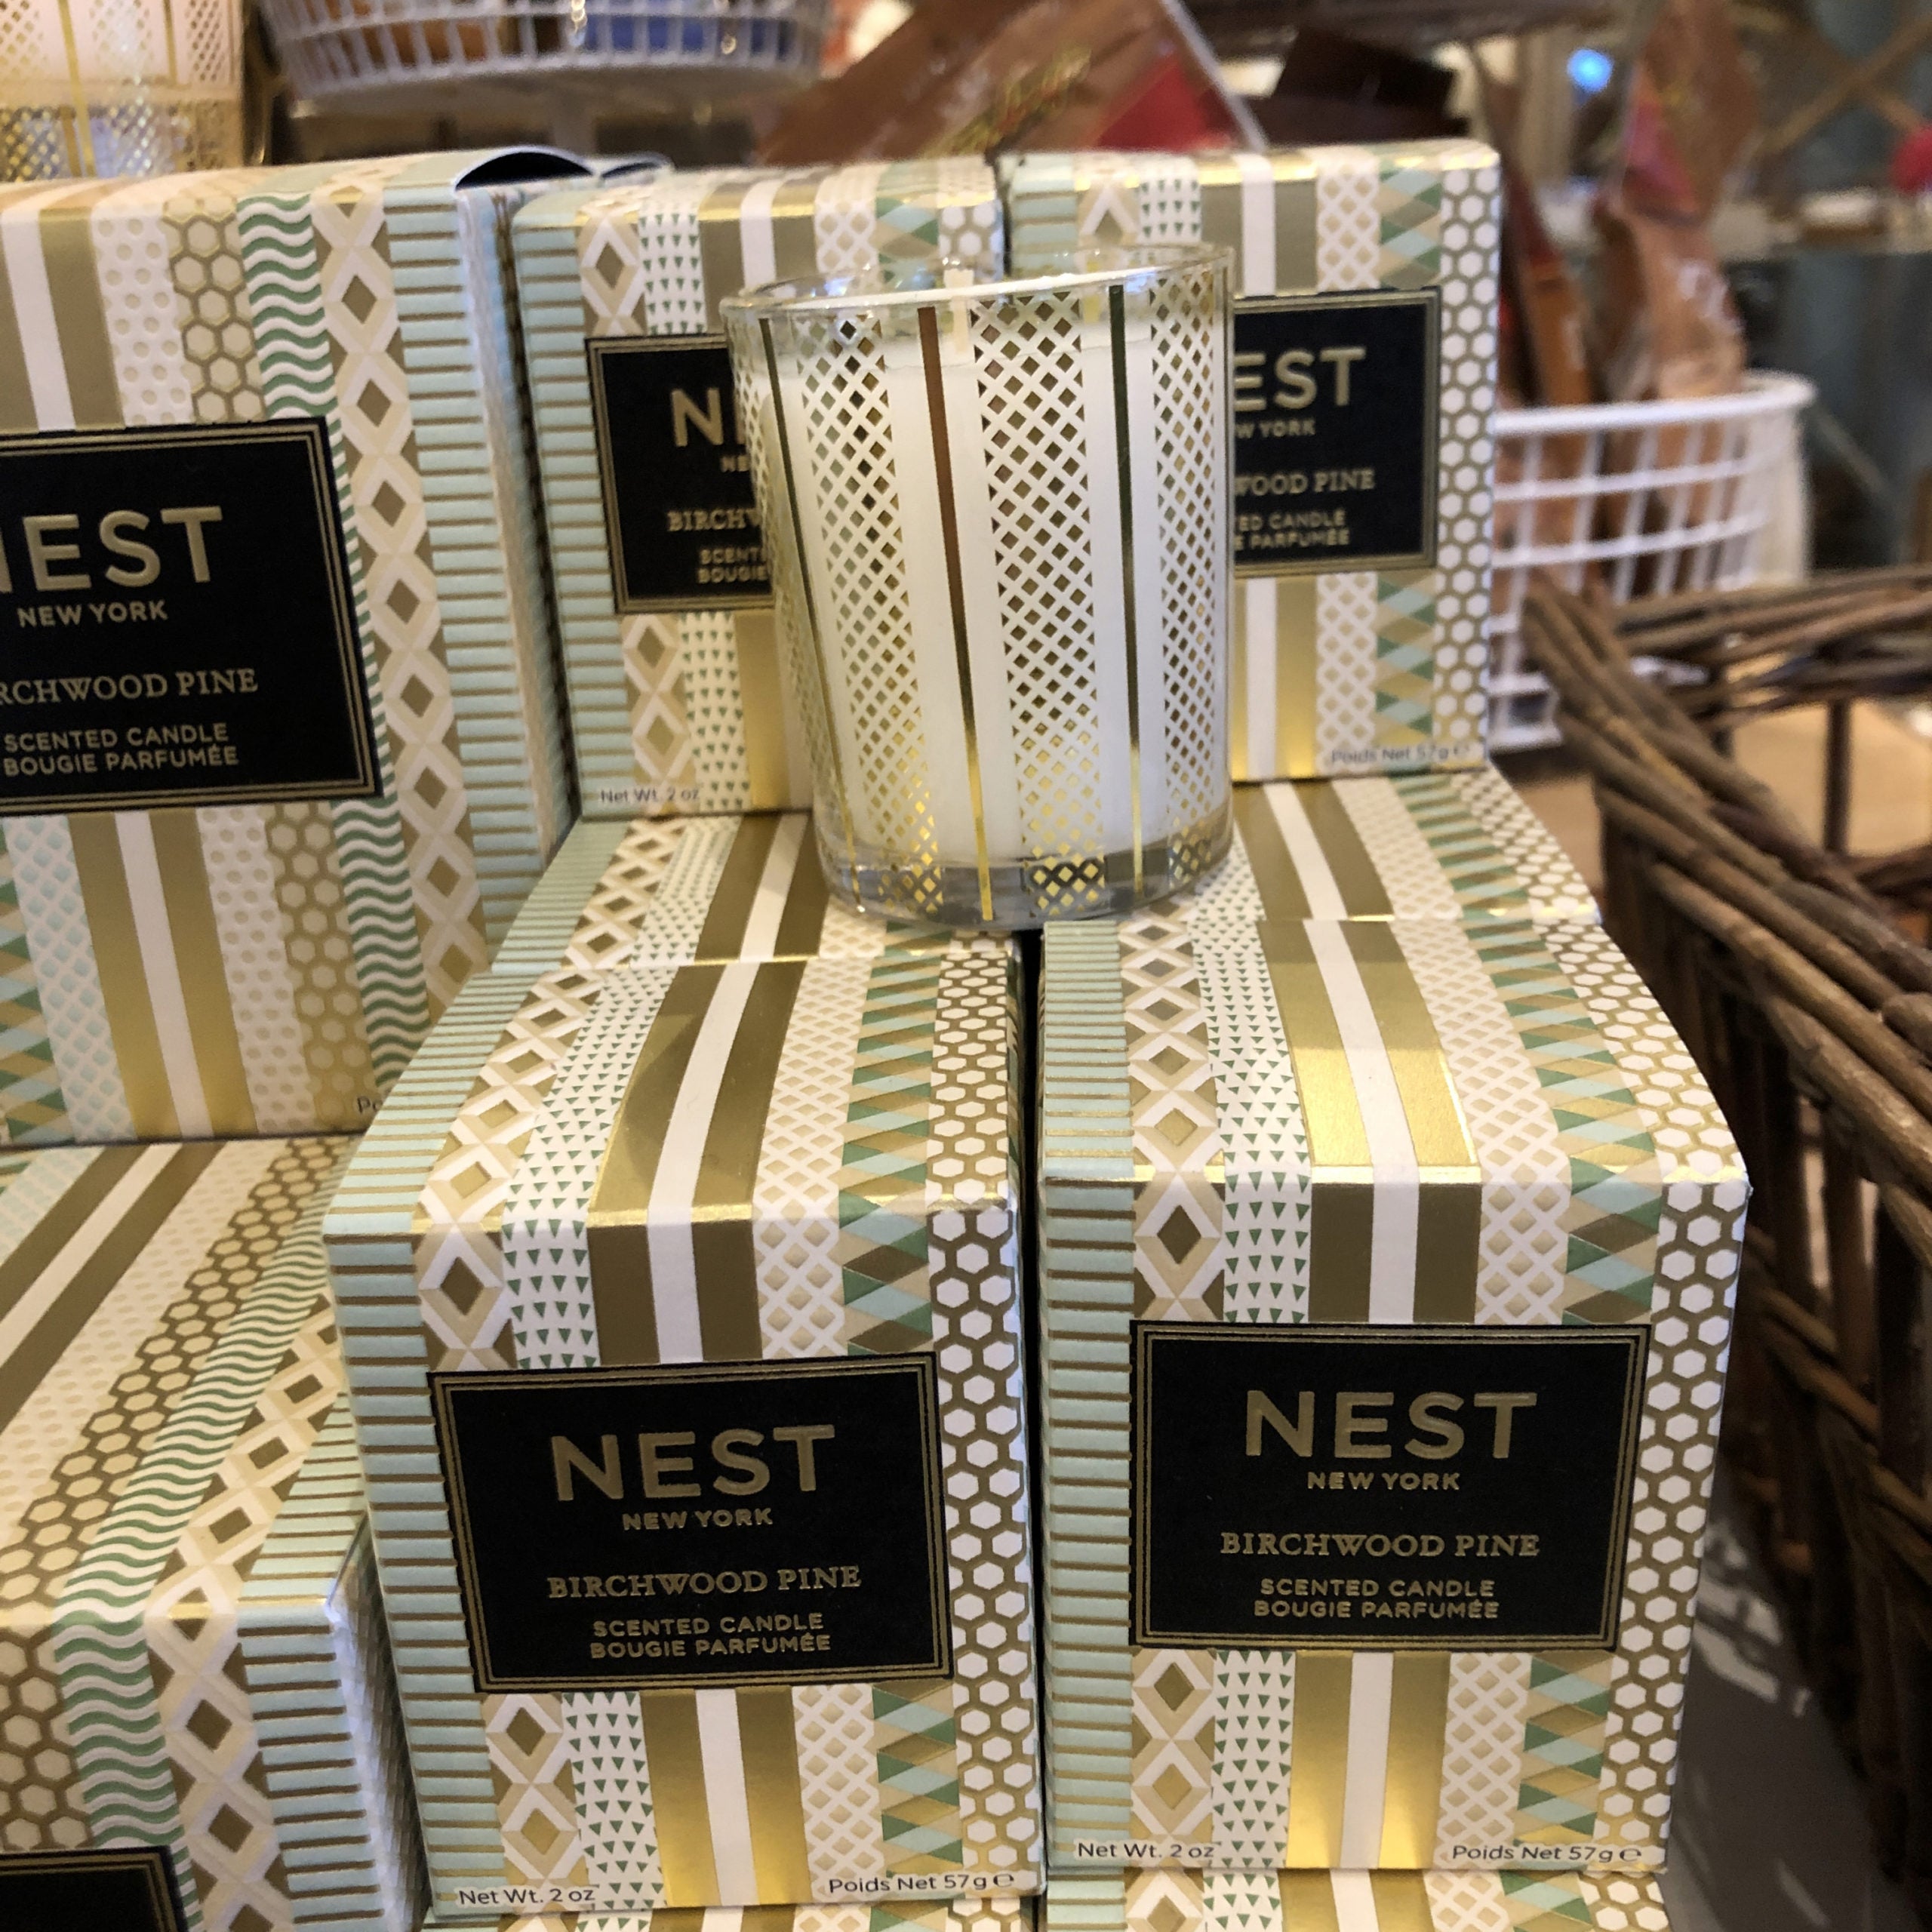 Nest New York Birchwood Pine Scented Candle in Box 2oz Votive